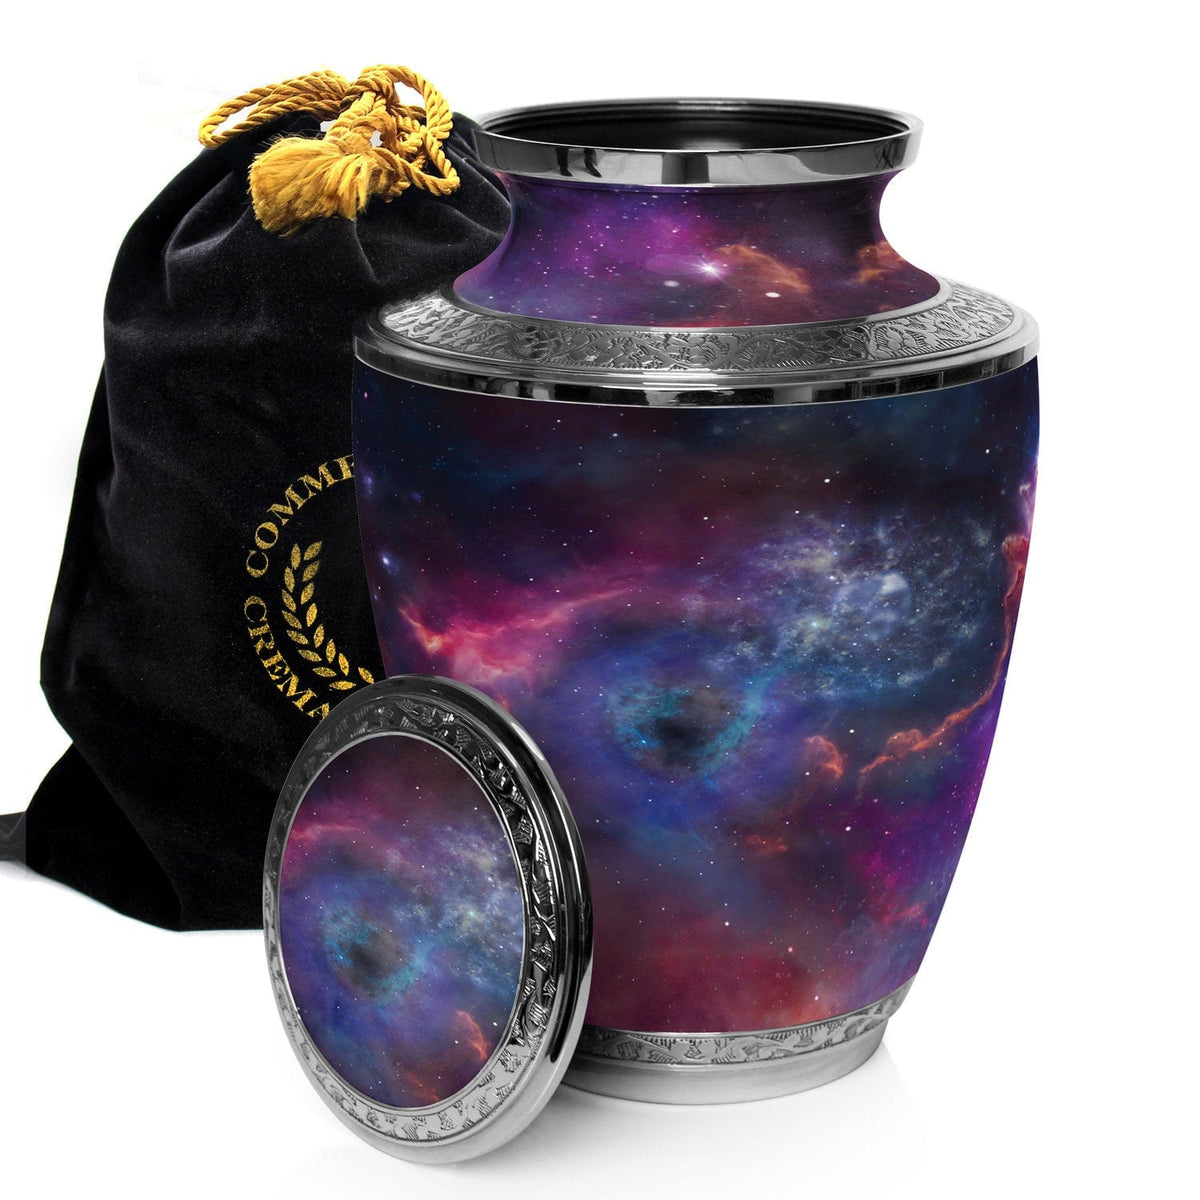 Commemorative Cremation Urns Home &amp; Garden Large Interstellar Nebula Cremation Urn